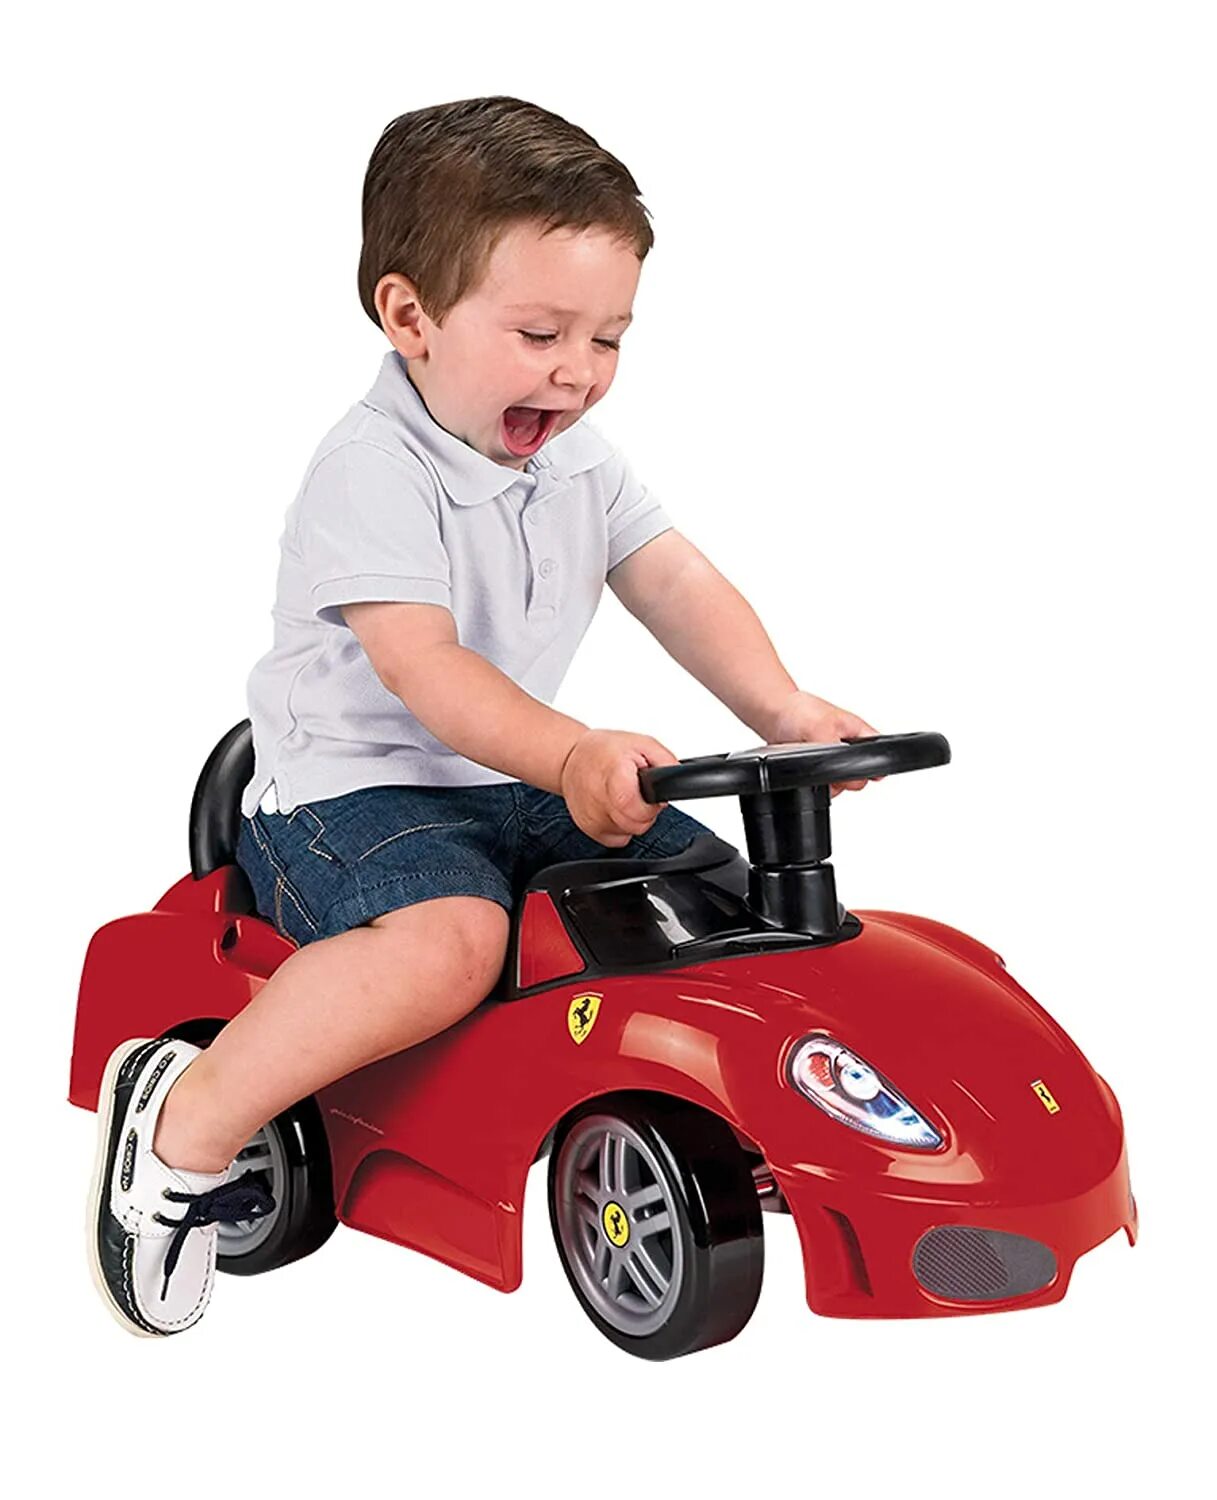 Children of machine. Каталка Растар Феррари. Ferrari Feber. Машина для детей. Машинки для малышей кататься.